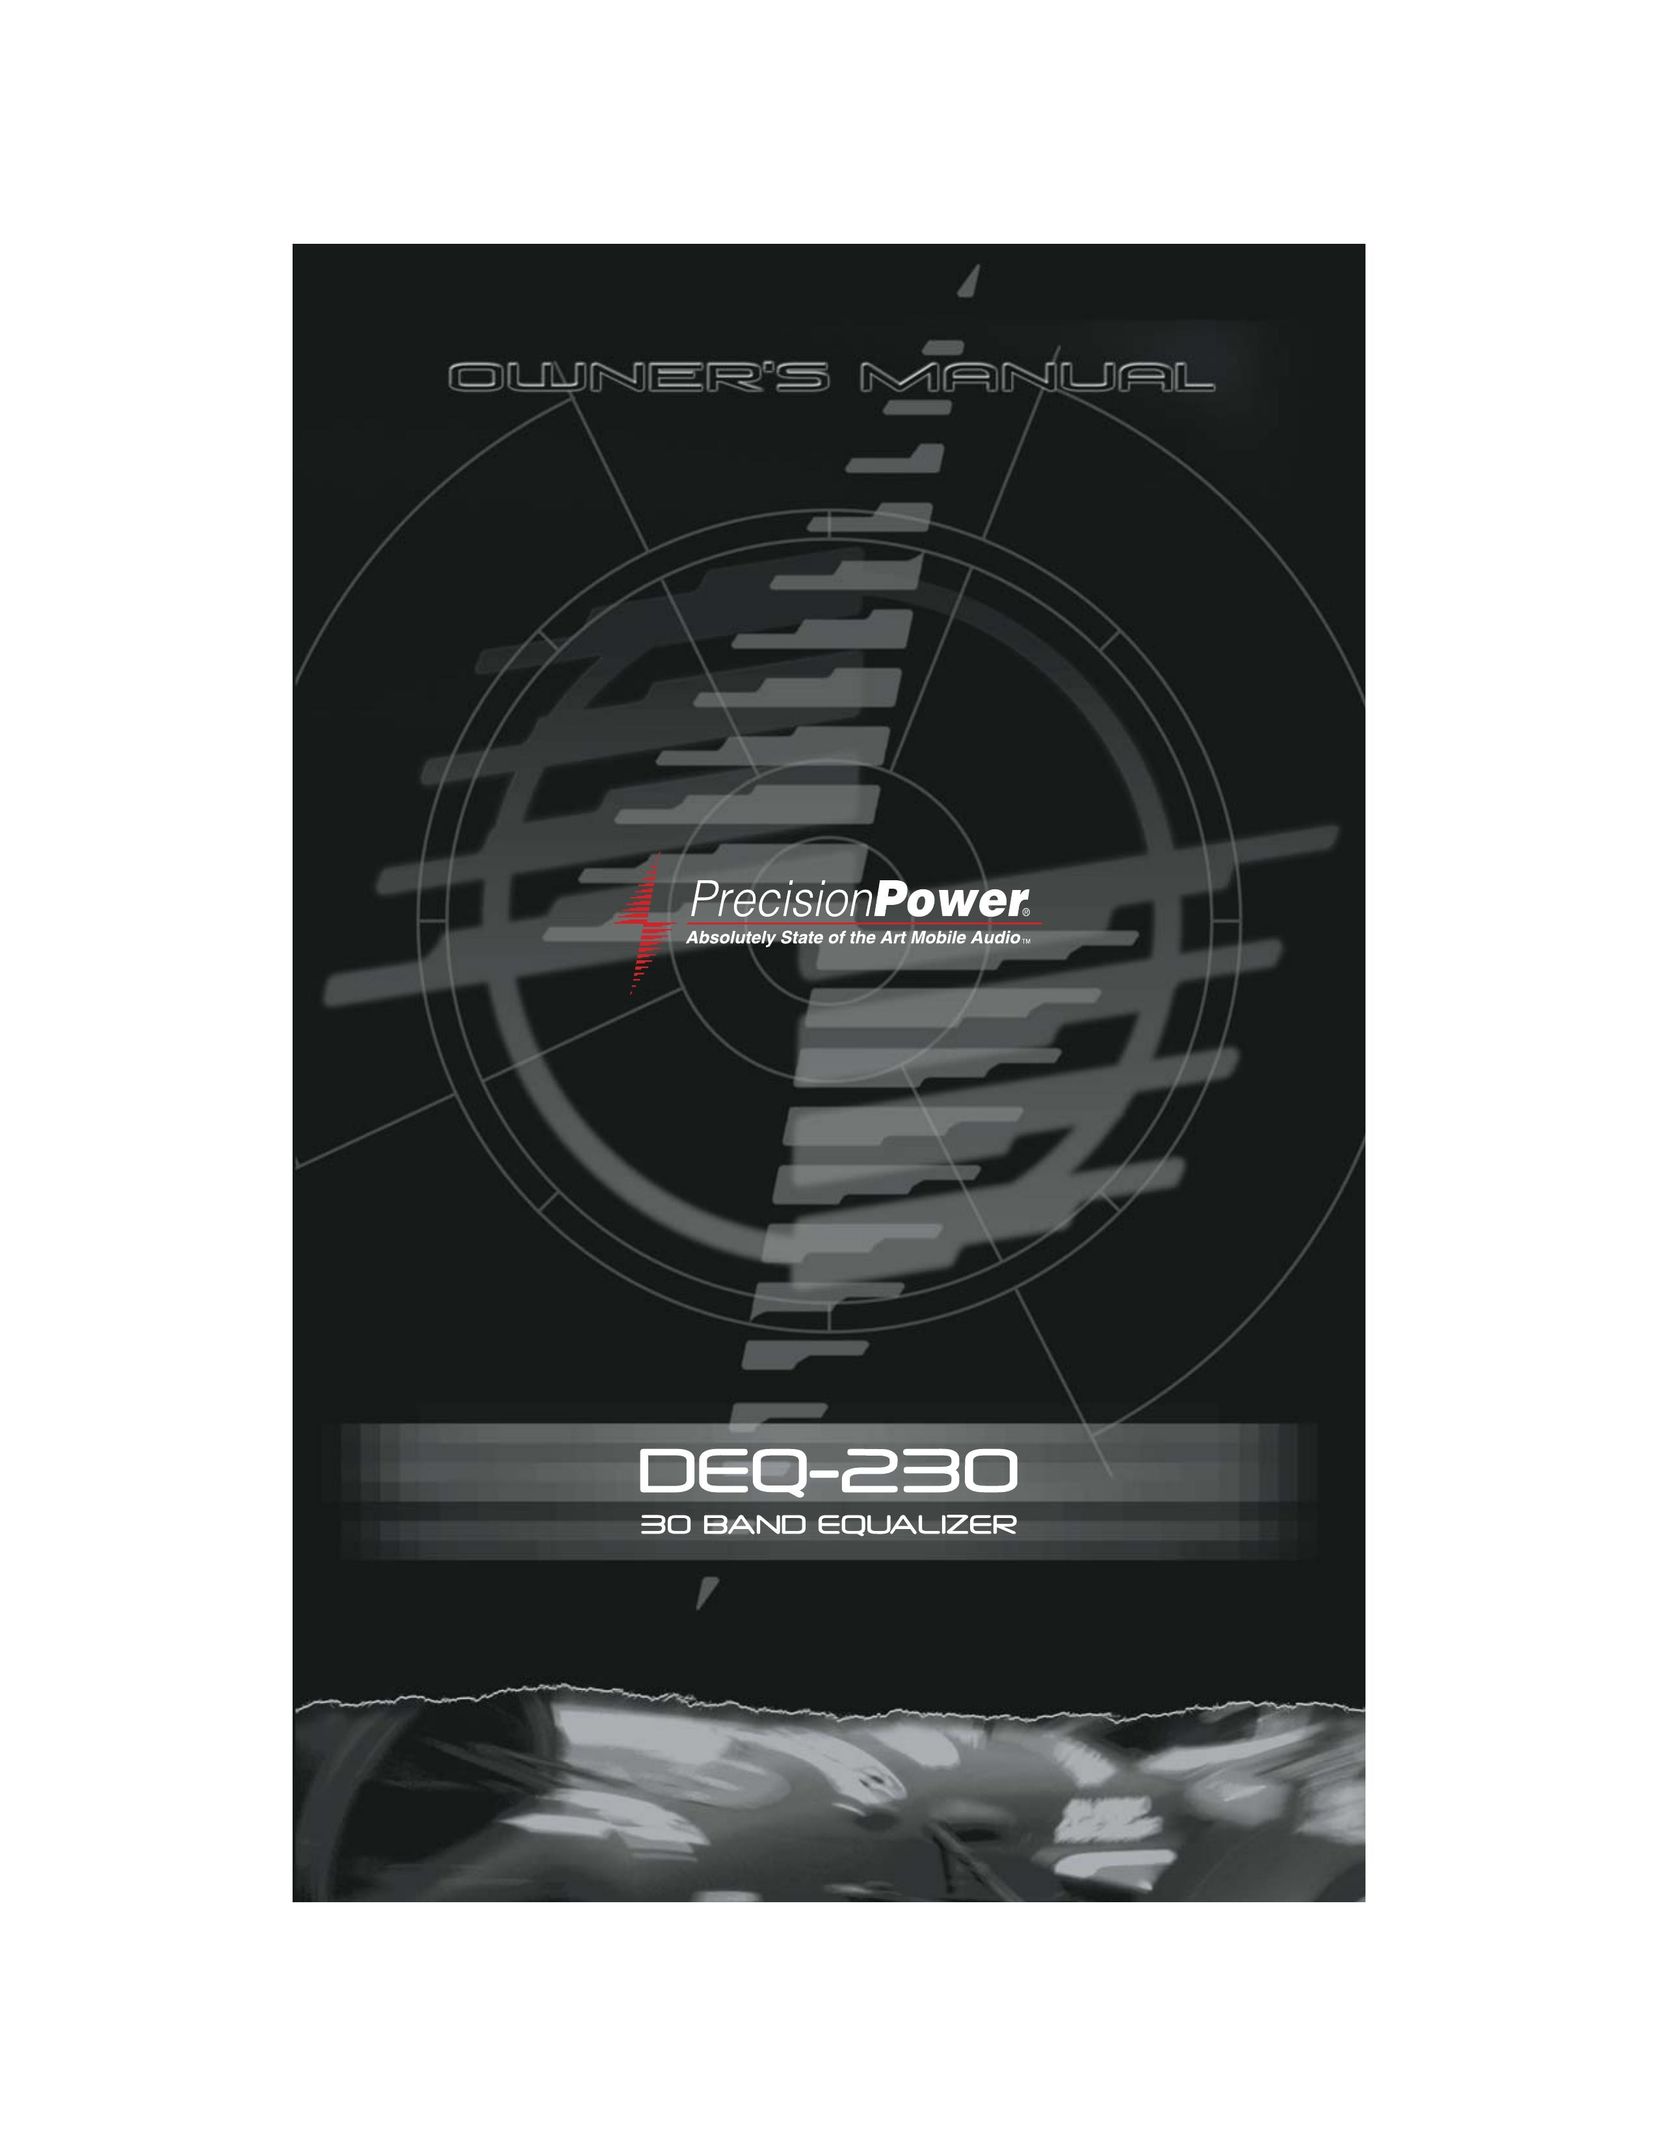 Precision Power DEQ-230 Stereo Equalizer User Manual